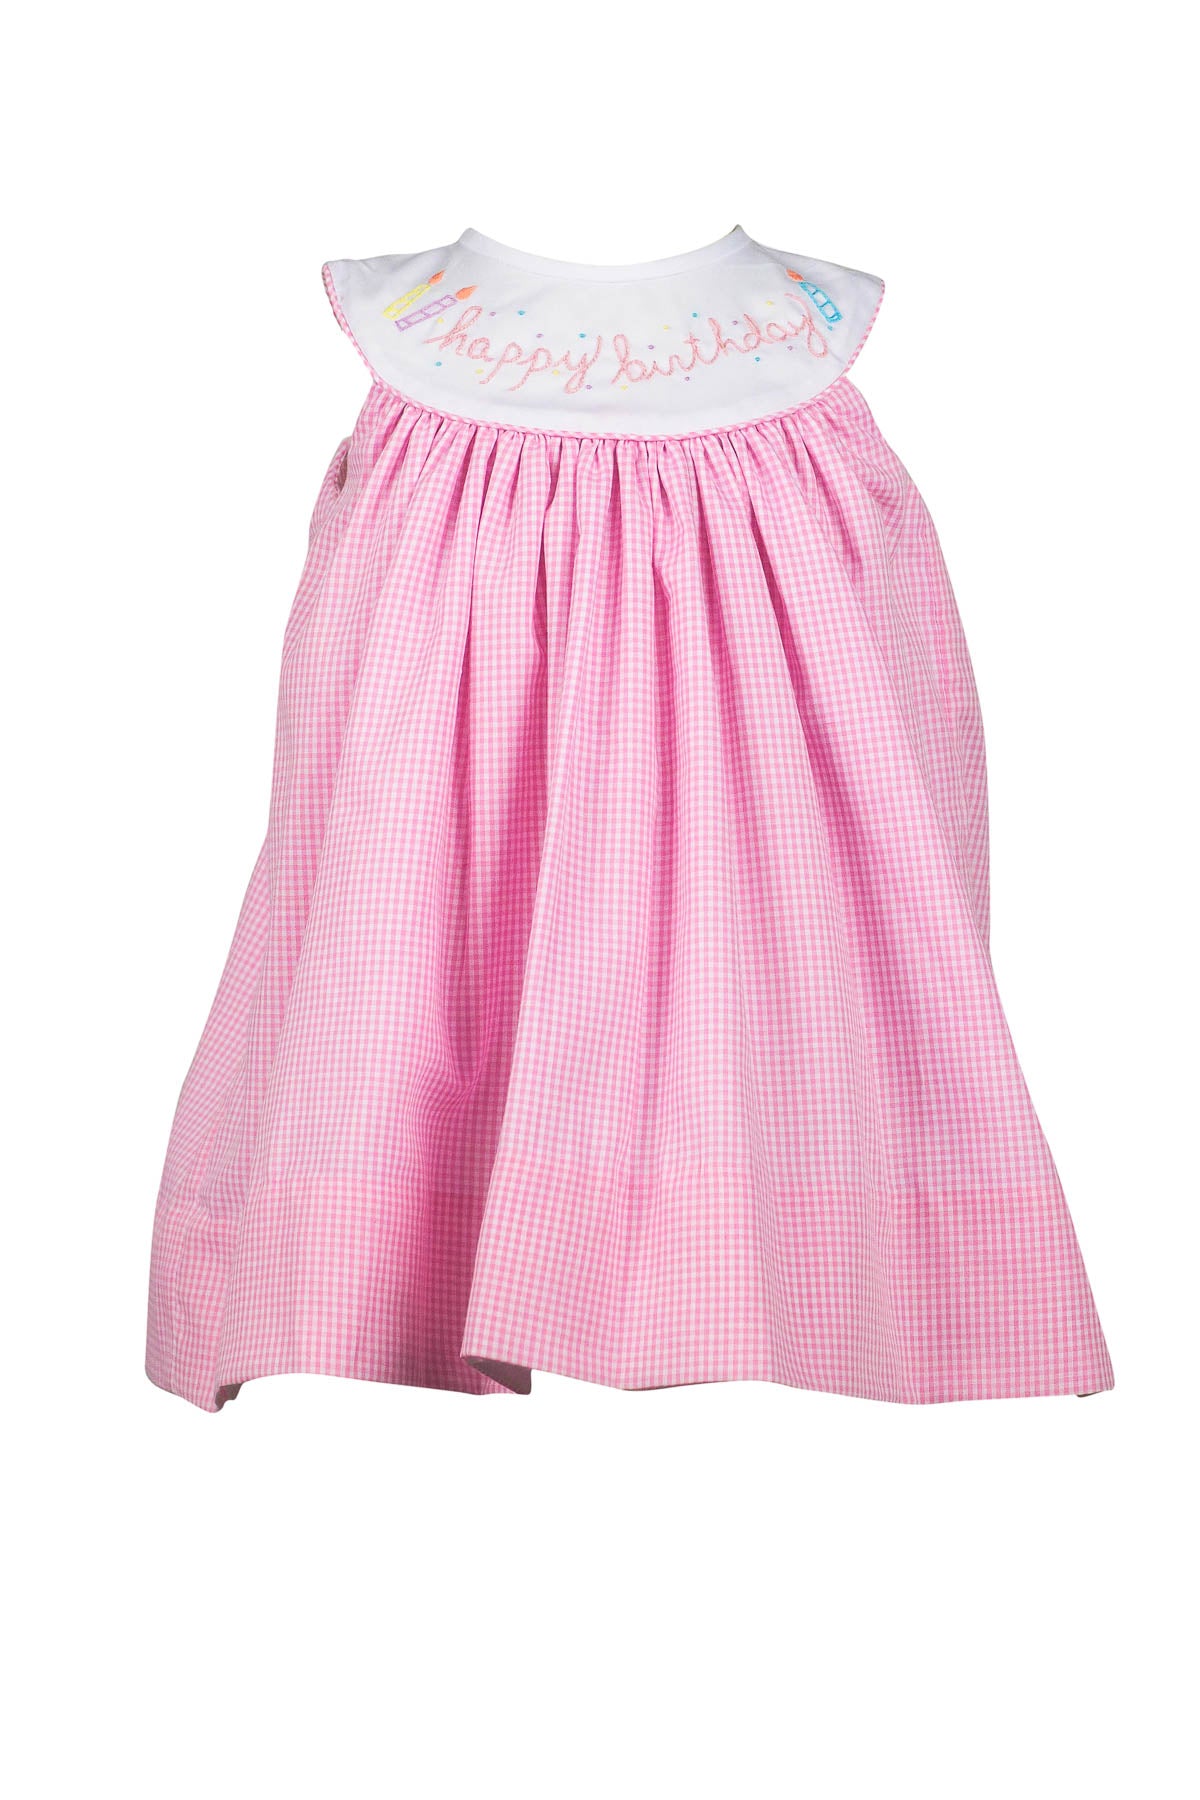 Birthday Girl Dress in Pink Gingham